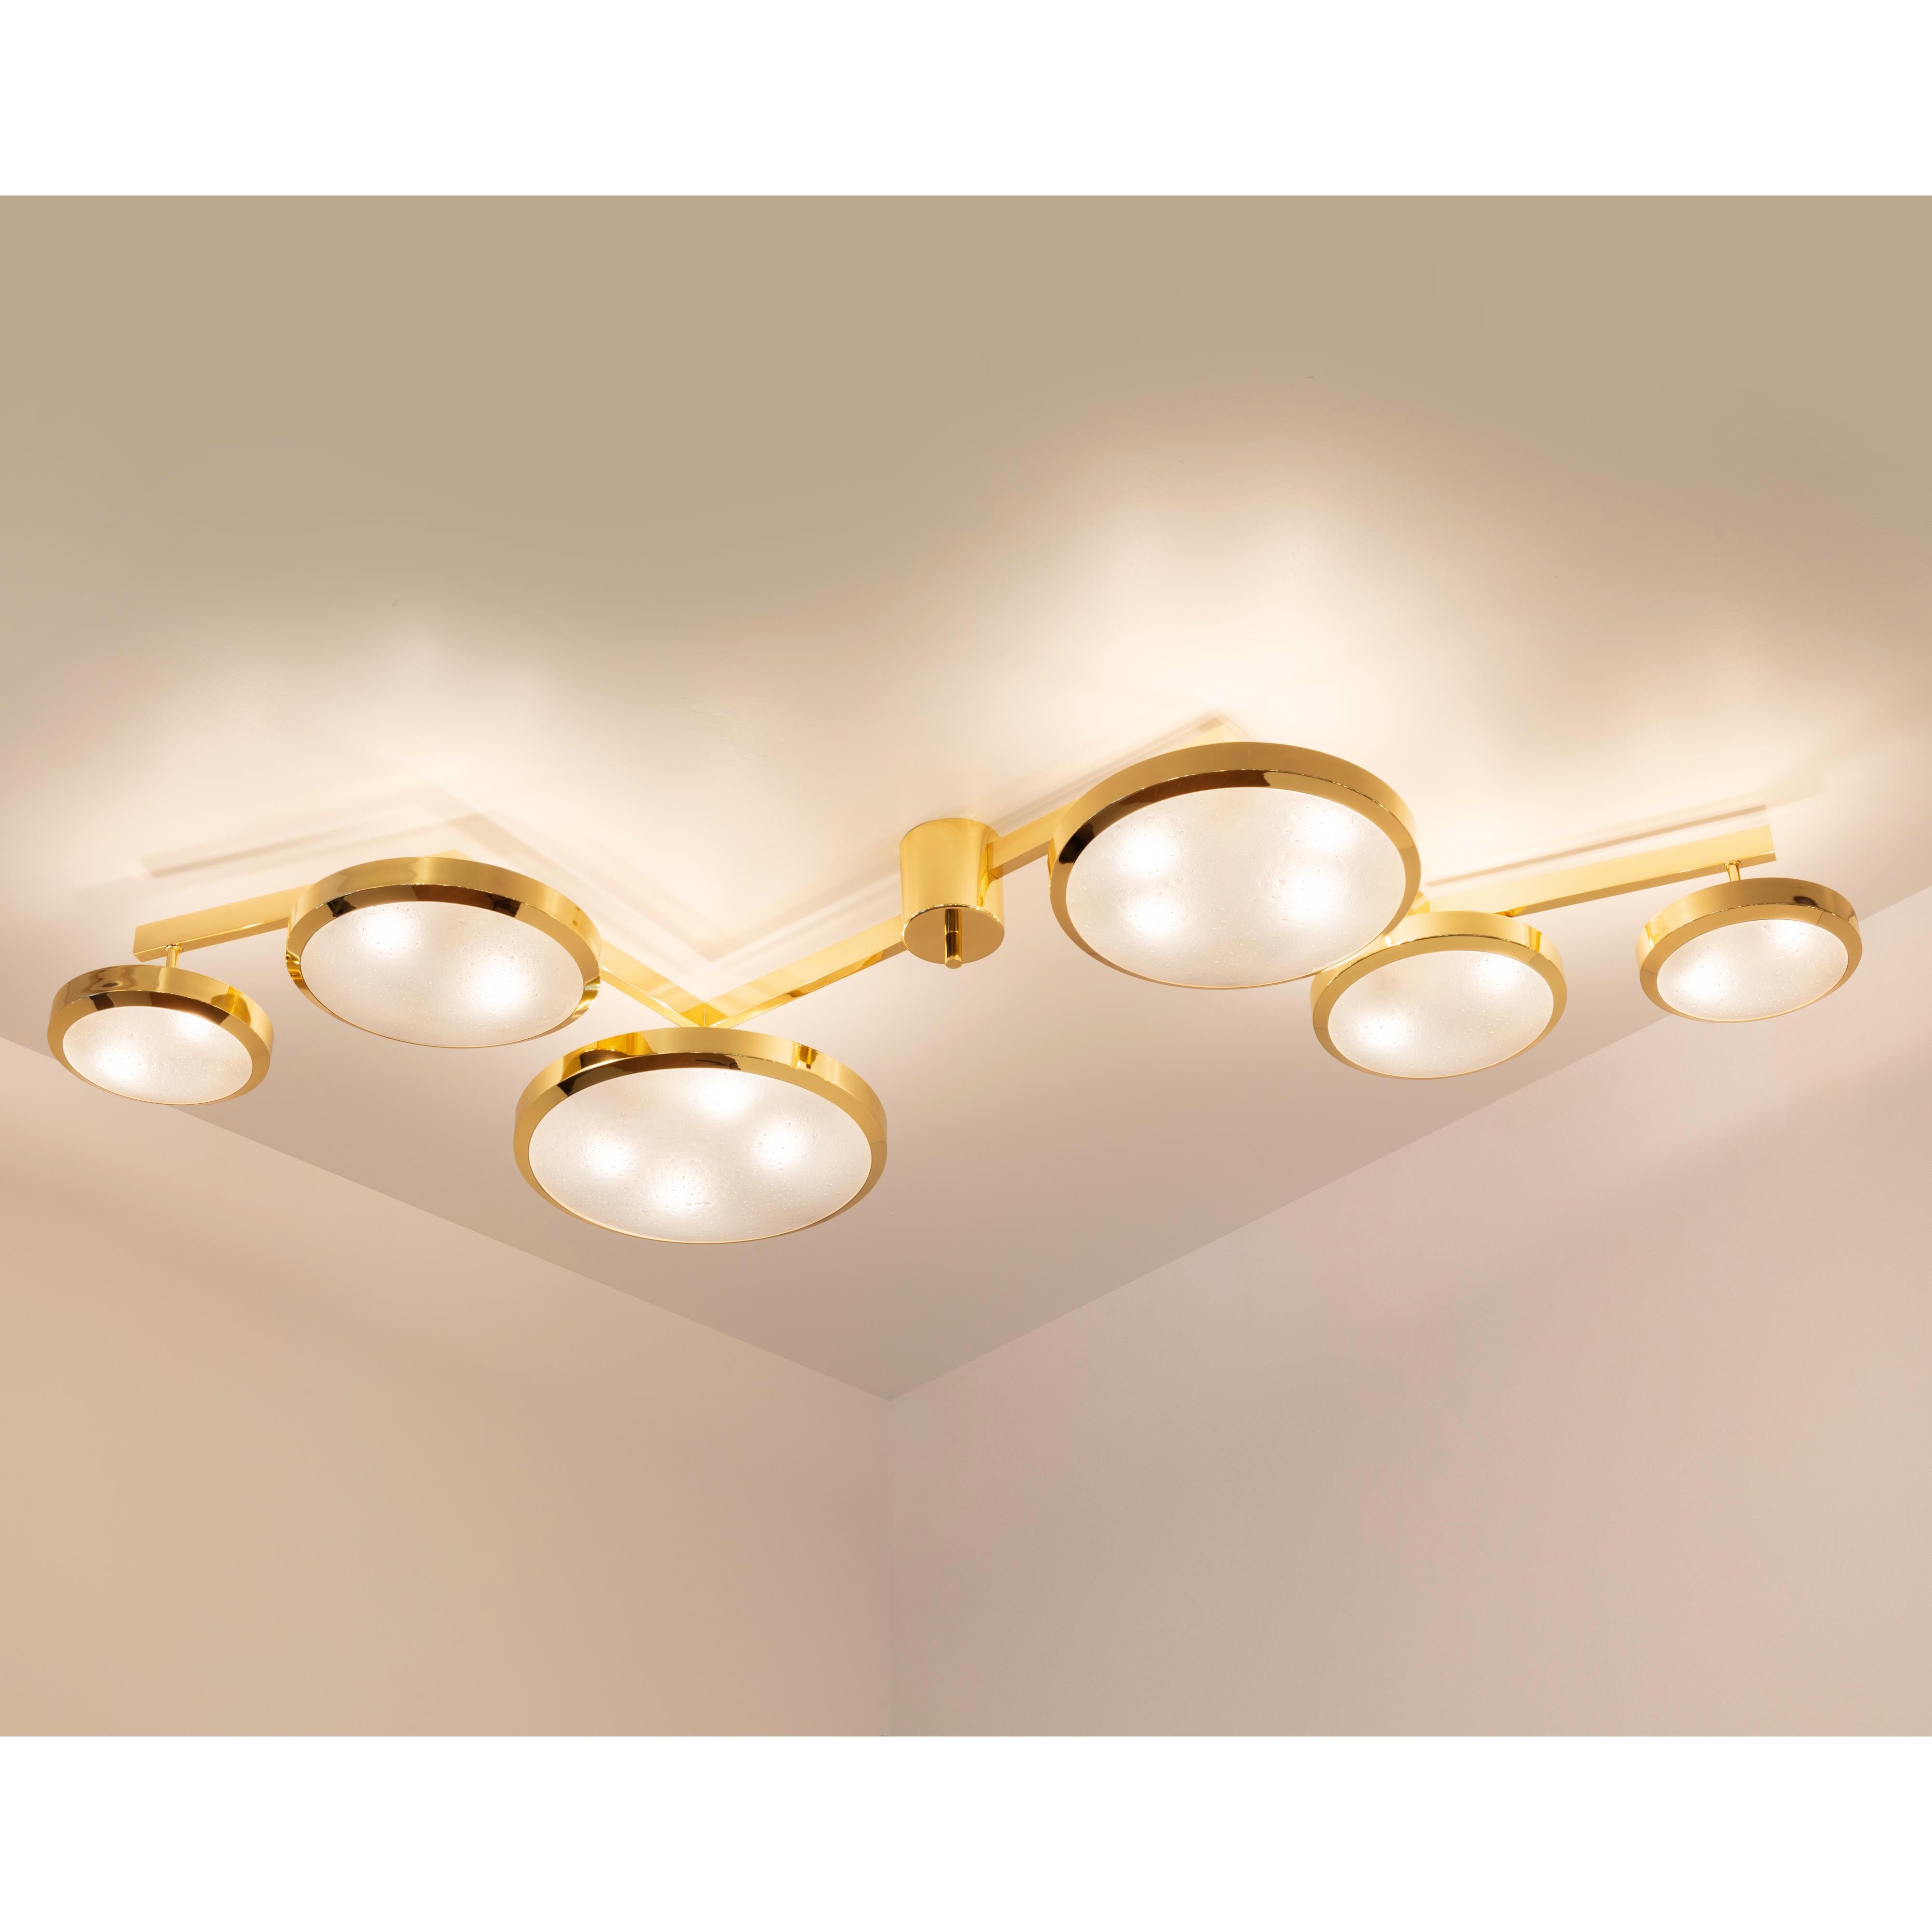 Brass Geometria Sospesa Ceiling Light by Gaspare Asaro-Polished Nickel Finish For Sale